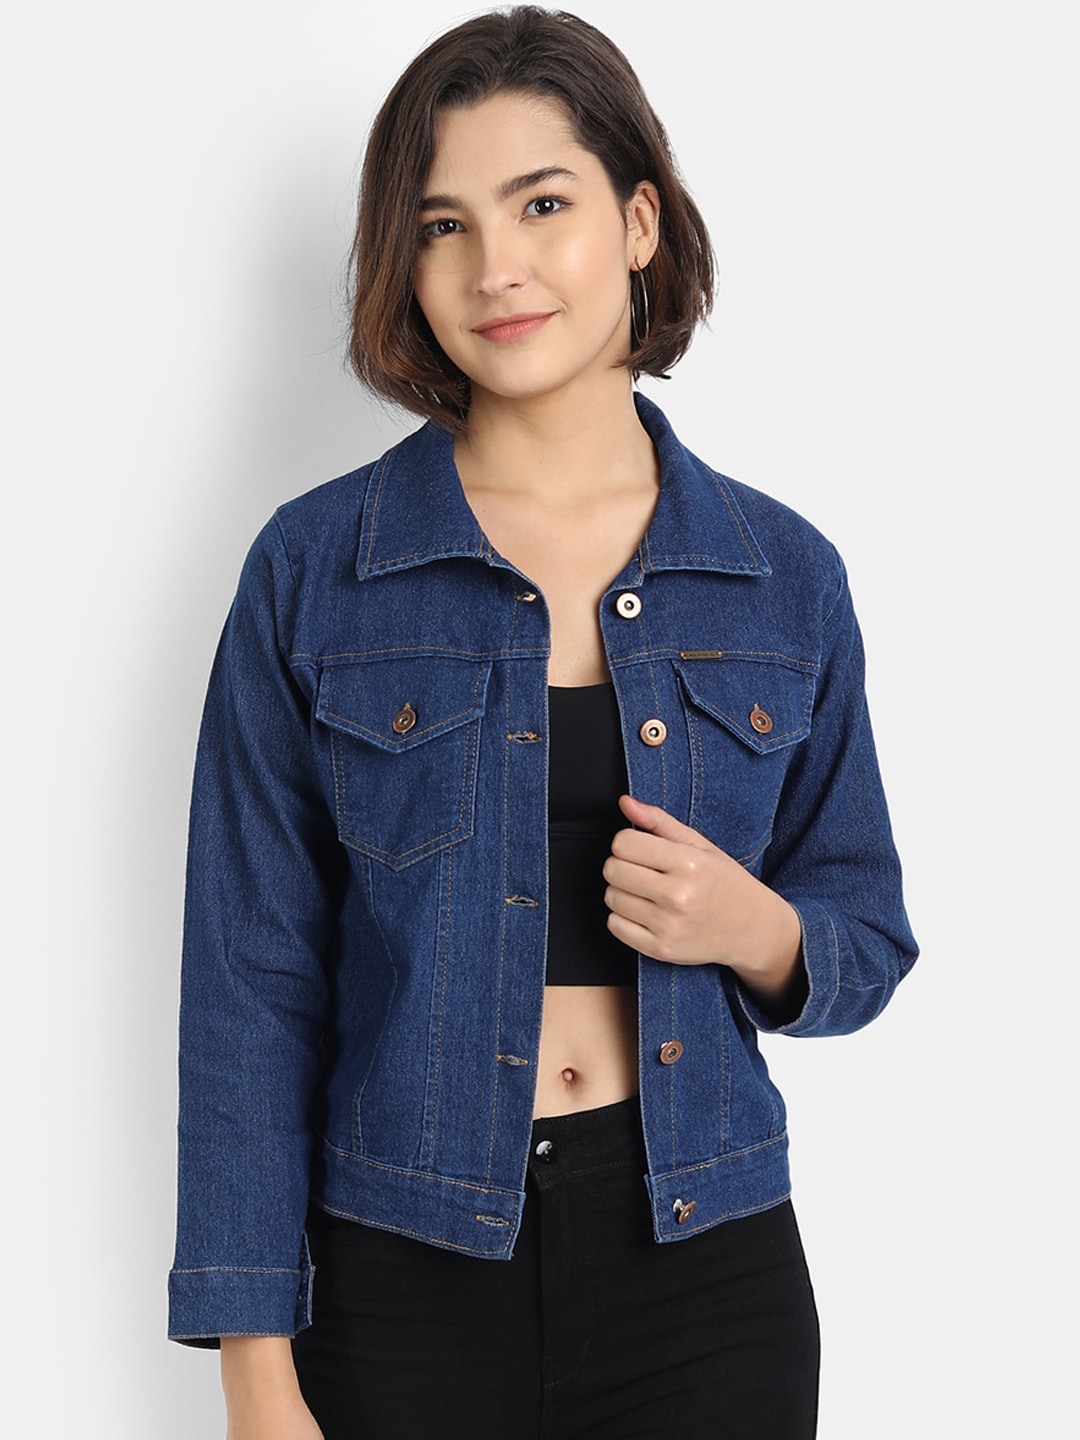 River Of Design Jeans Women Blue Denim Jacket Price in India